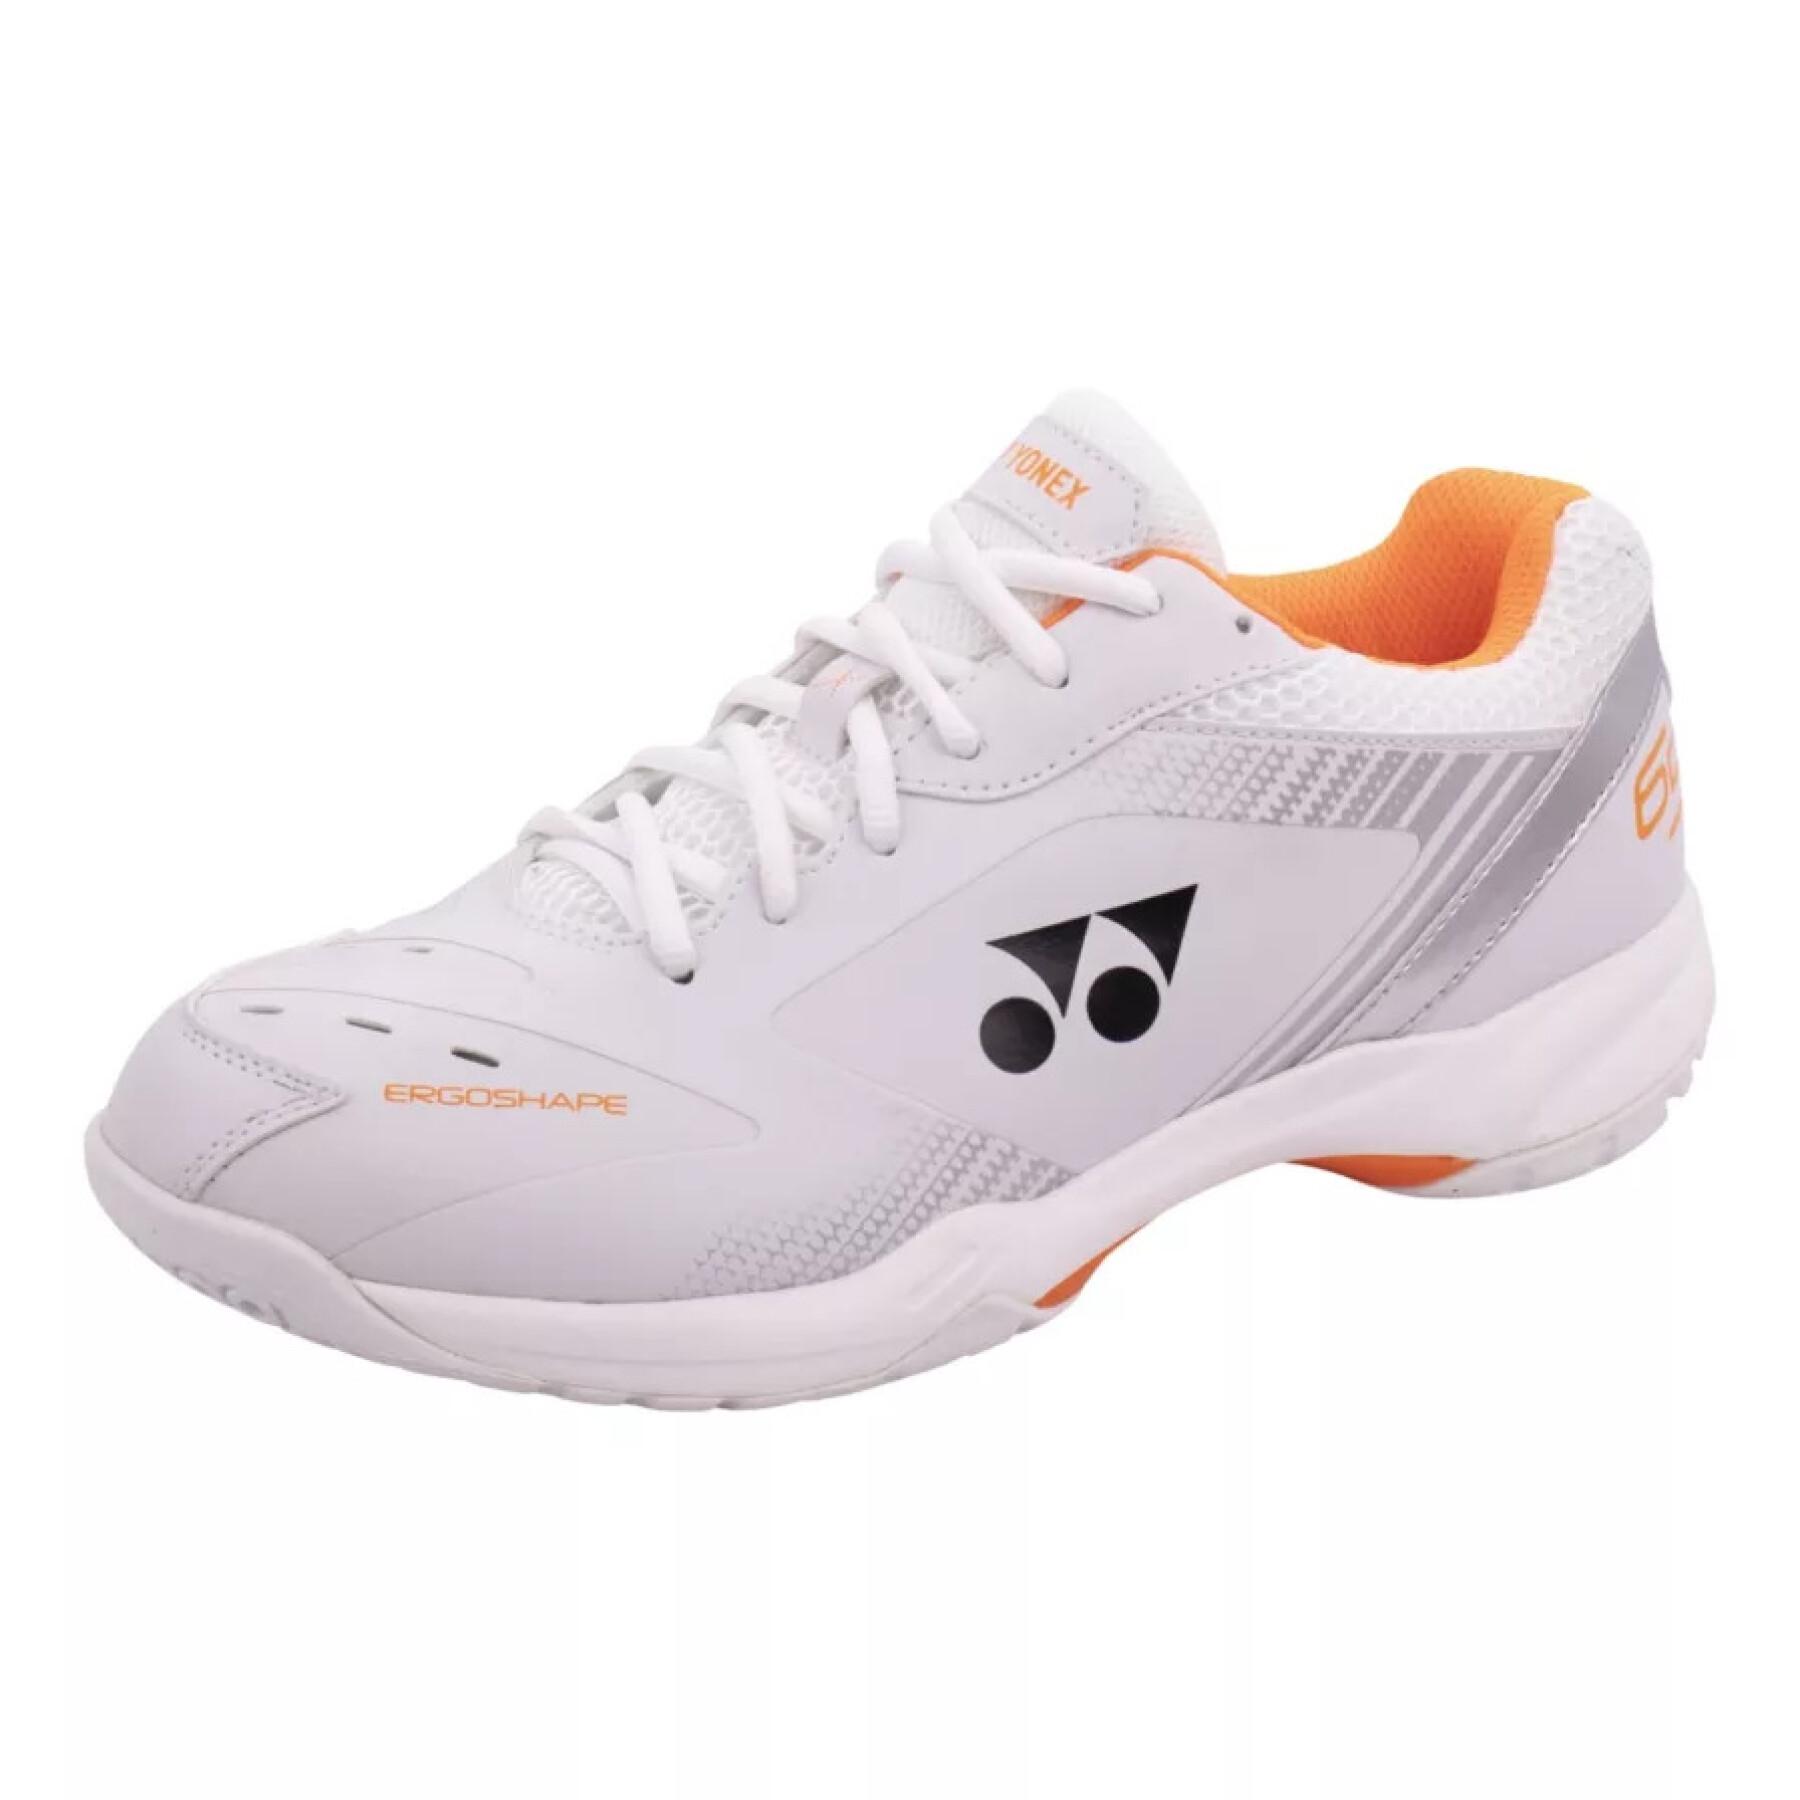 Badminton shoes Yonex Power Cushion 65 X